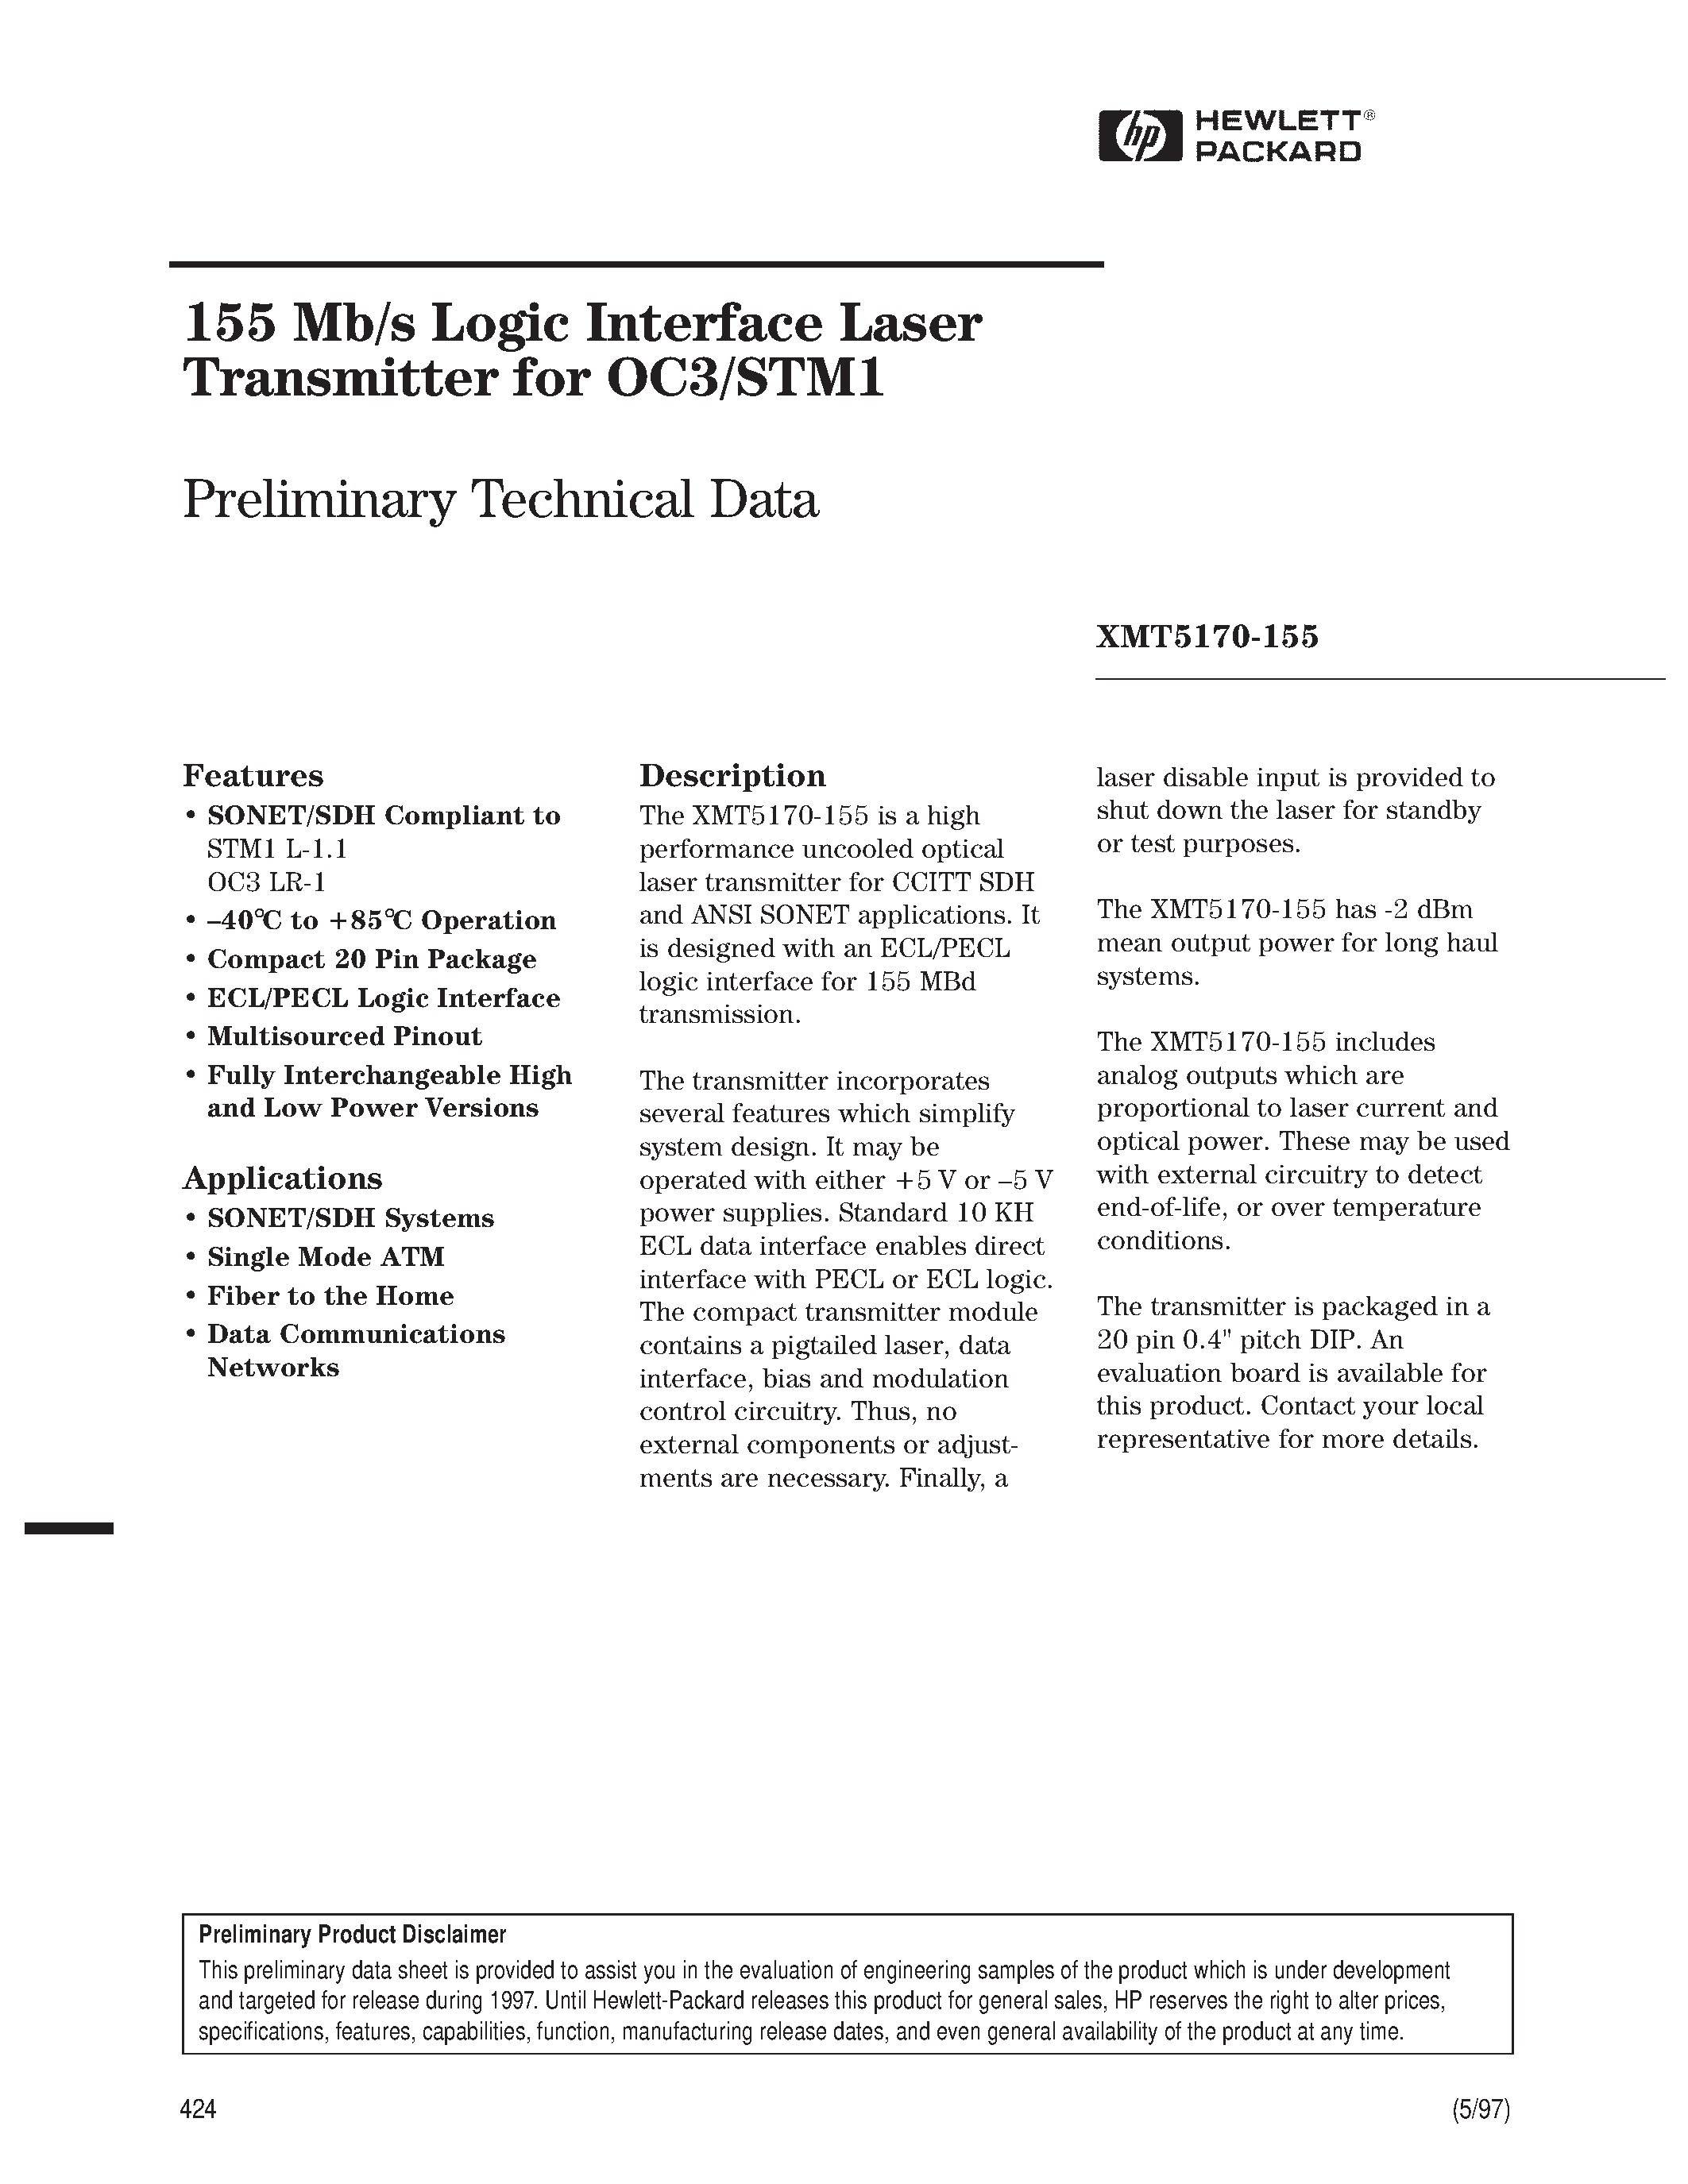 Datasheet XMT5170A-155-FP - 155 Mb/s Logic Interface Laser Transmitter for OC3/STM1 page 1